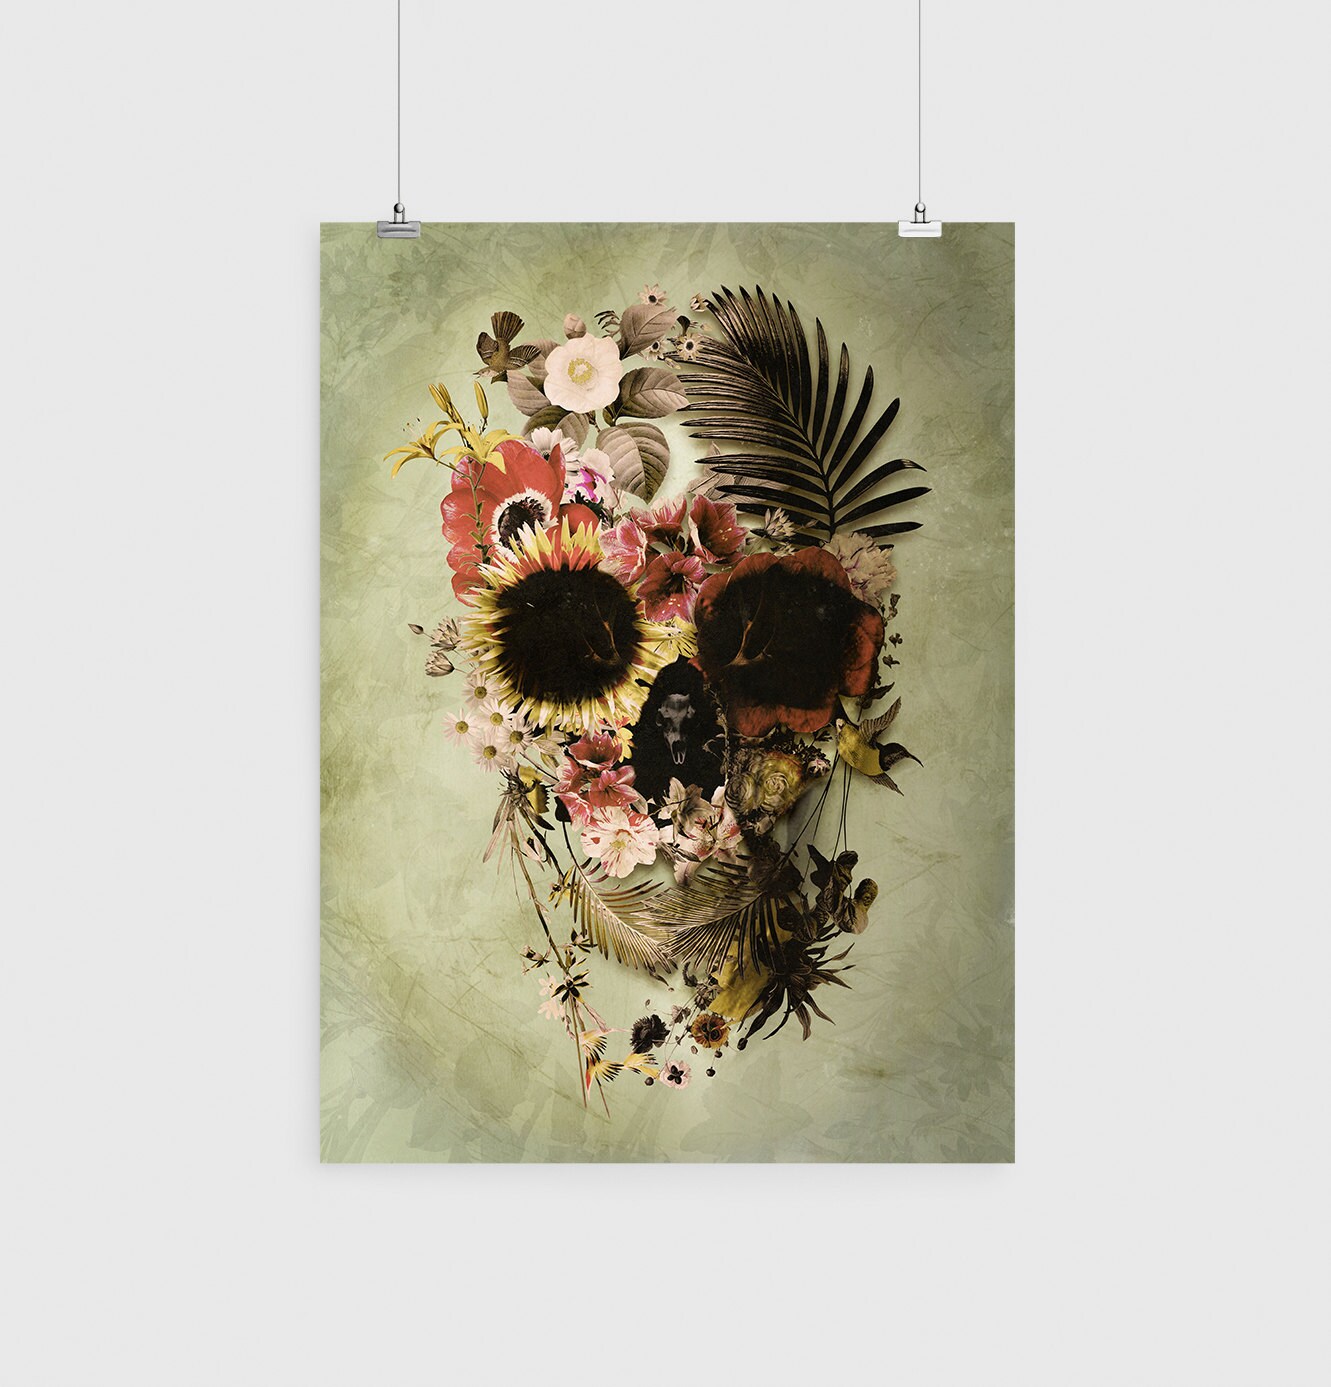 Garden Skull Poster, Floral Skull Print Home Decor, Flower Skull Wall Art, Sugar Skull Art Print Wall Decor, Skull Illustration By Ali Gulec